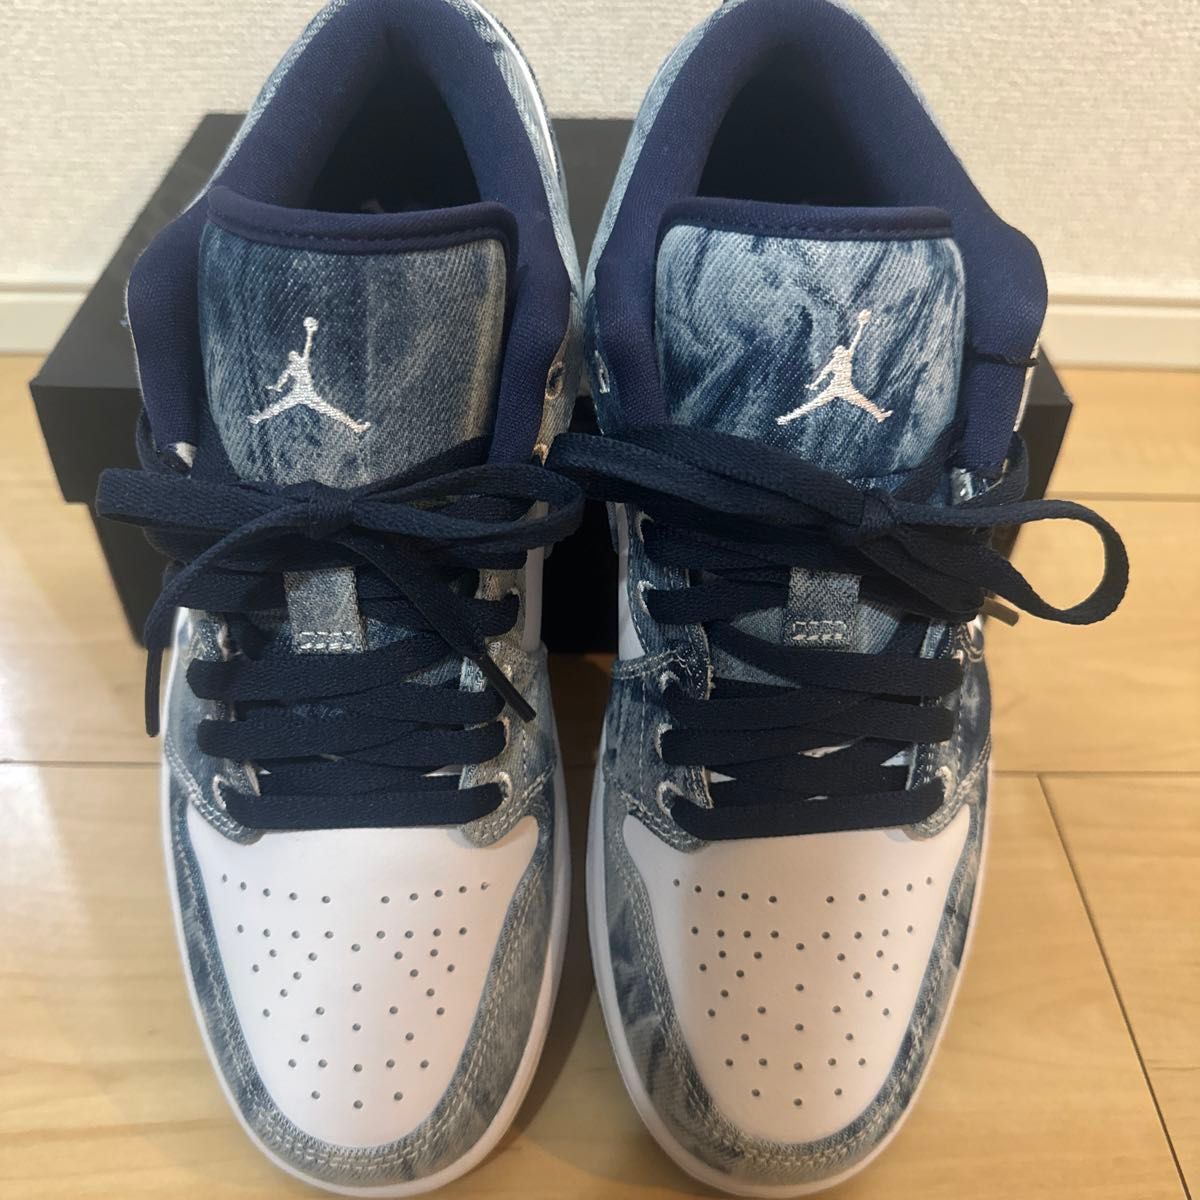 Nike Air Jordan 1 Low "Washed Denim"